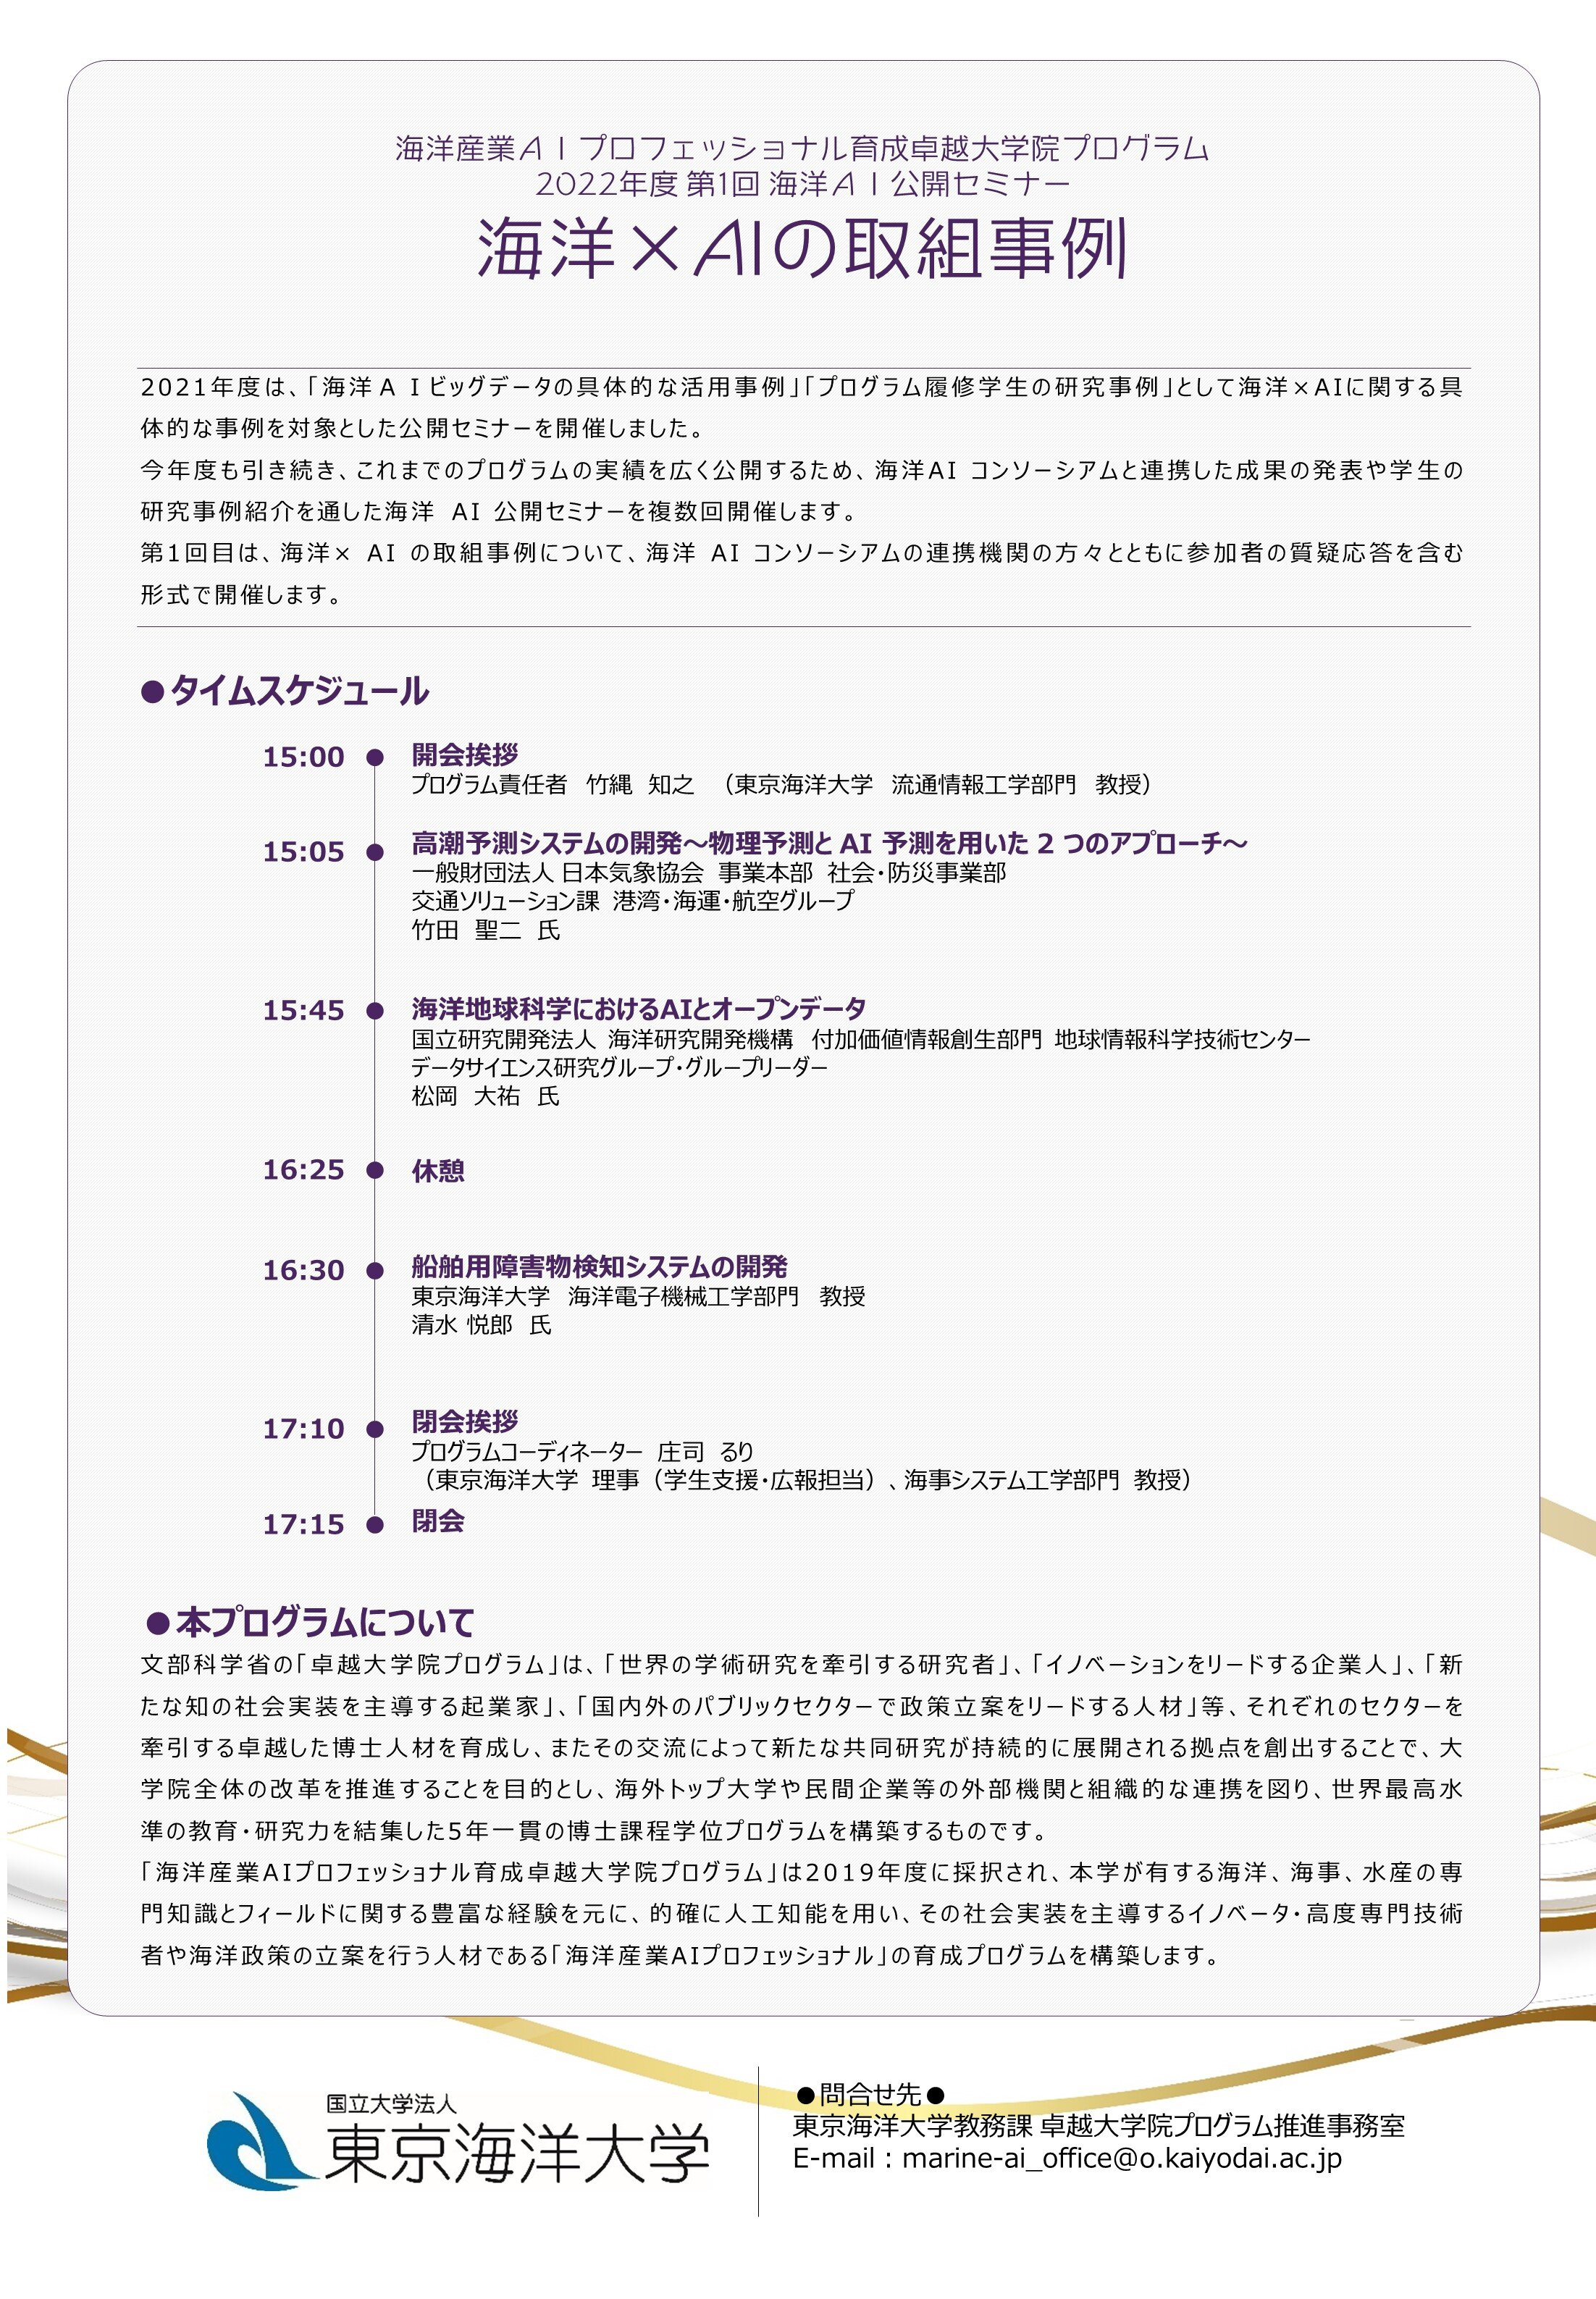 https://www.g2.kaiyodai.ac.jp/marine-ai/news/img/news/slide2.jpg